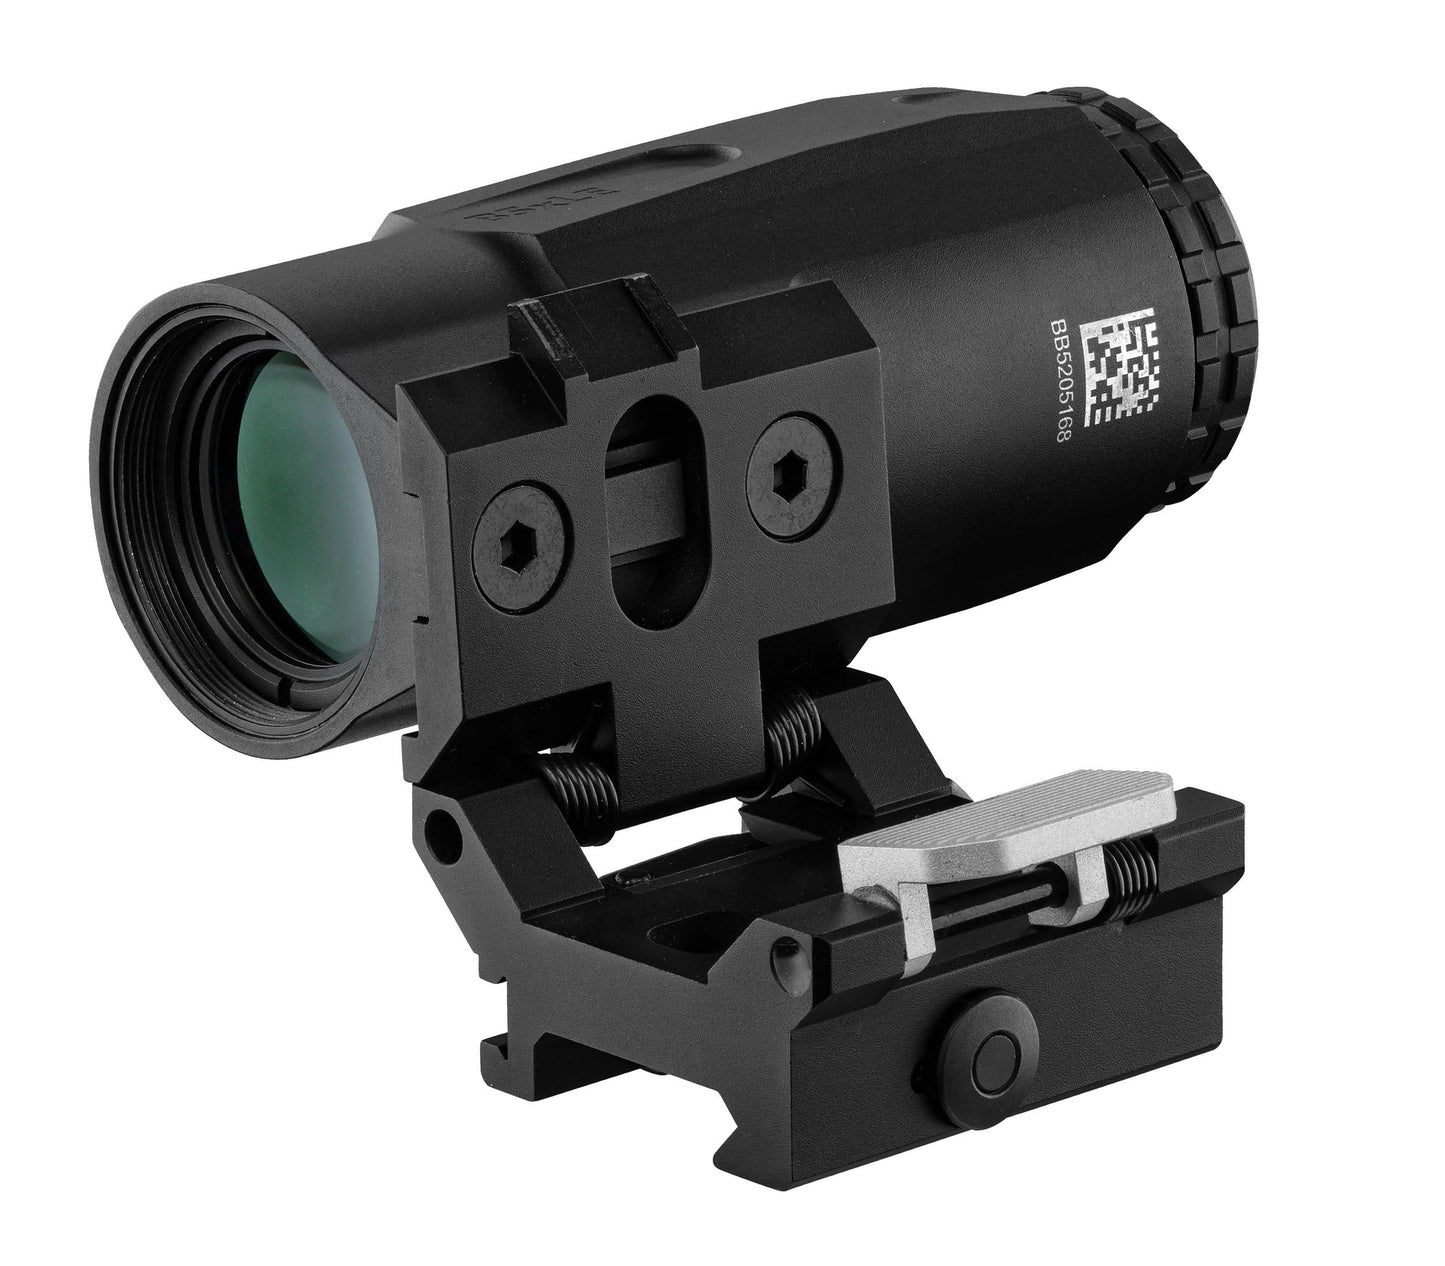 Adaptateur Magnifier basculant x5 B5X - FALKE-T.A DEFENSE